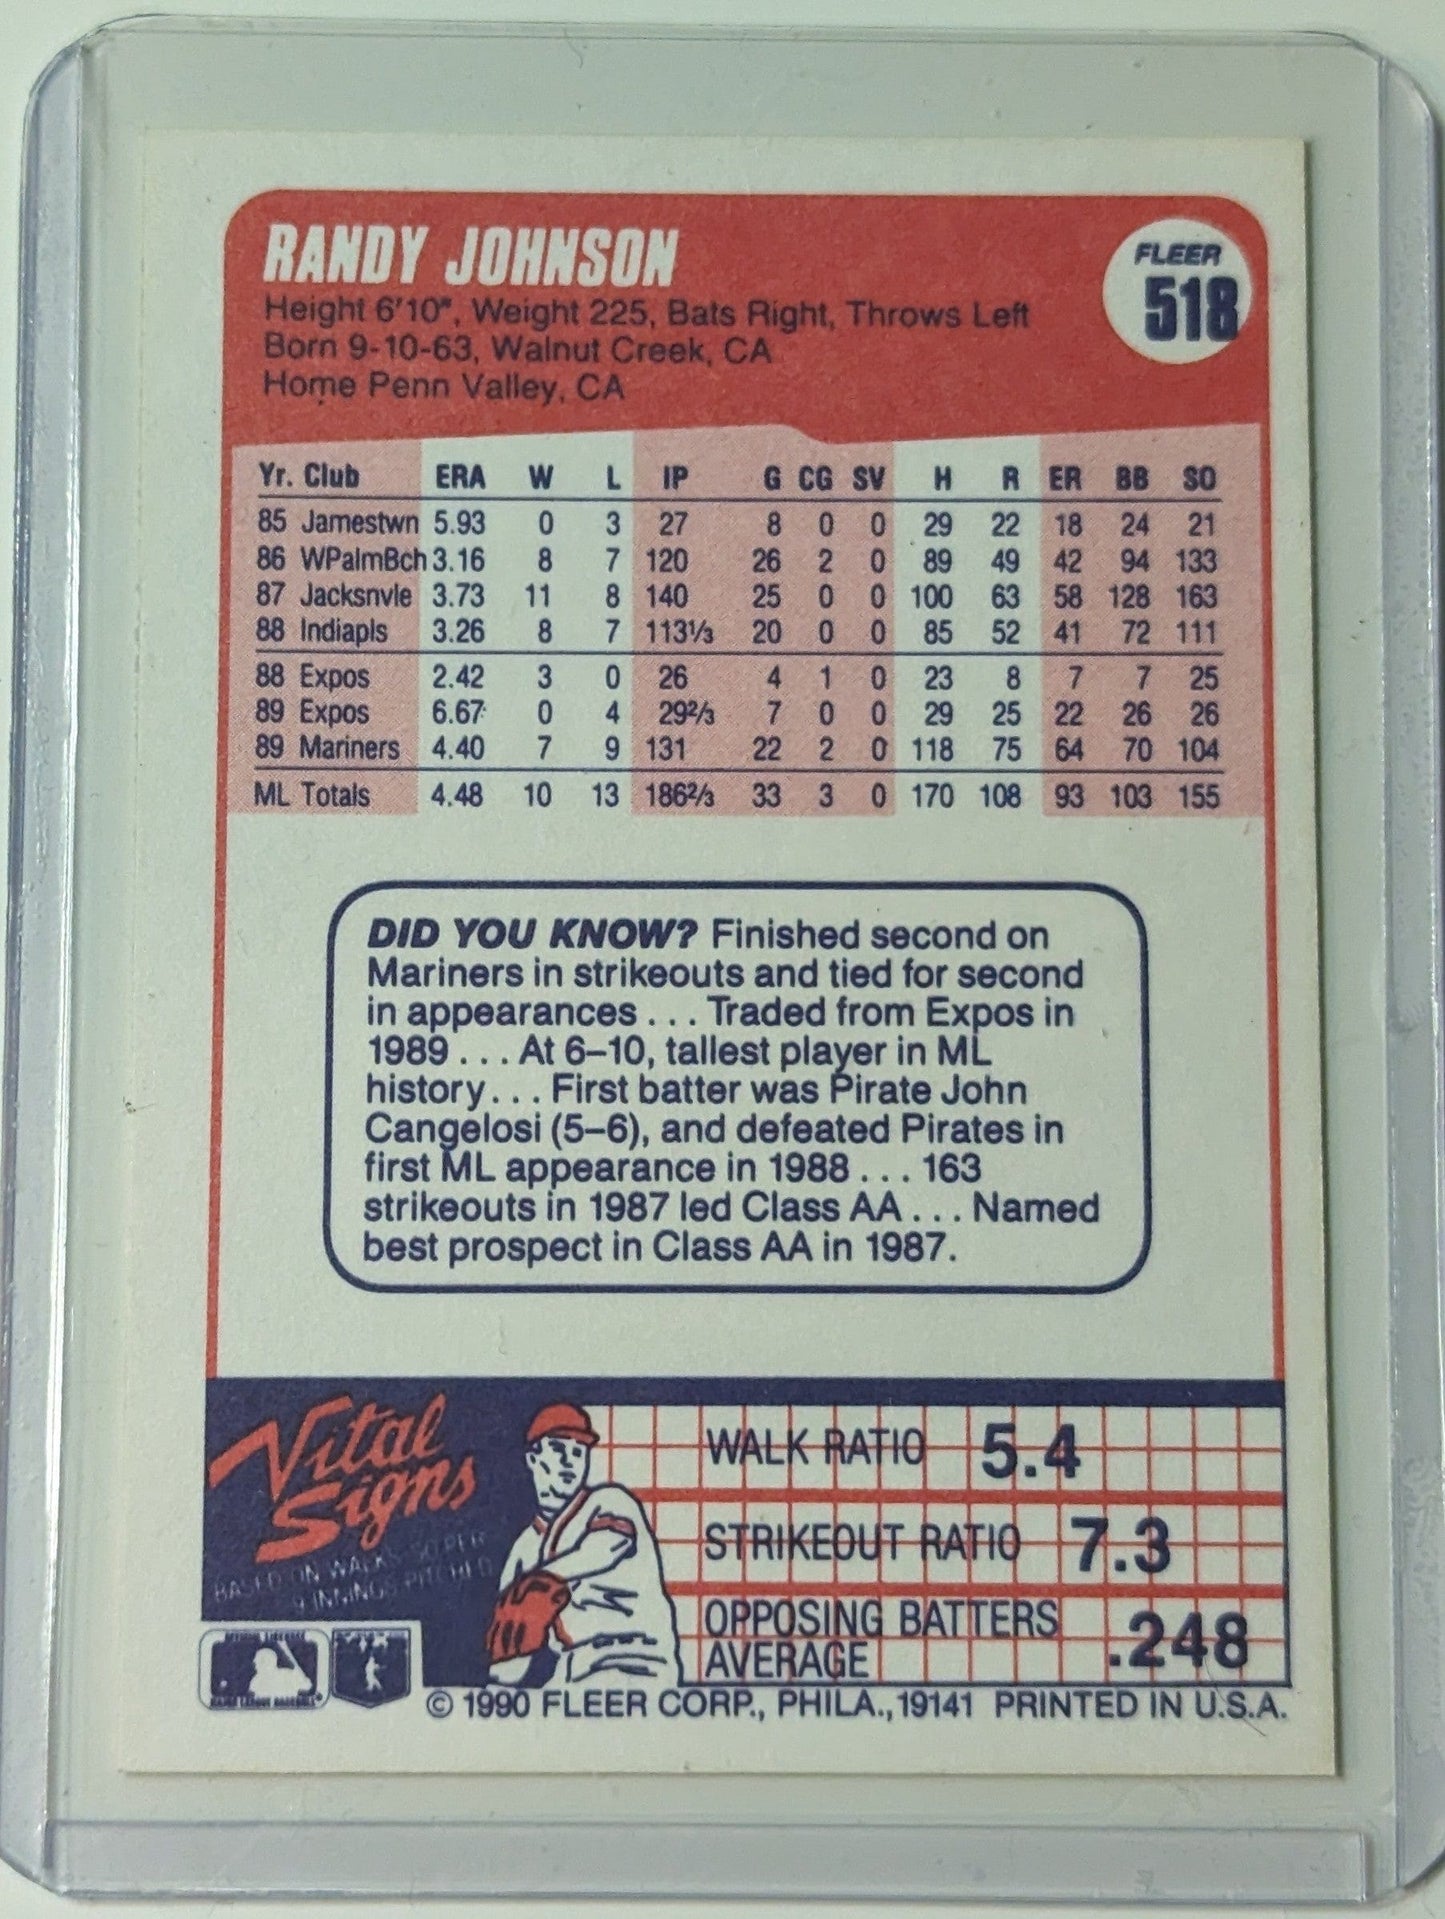 FIINR Baseball Card 1990 Fleer Randy Johnson MLB Baseball Error Card #518 - Error Card - Mint Condition